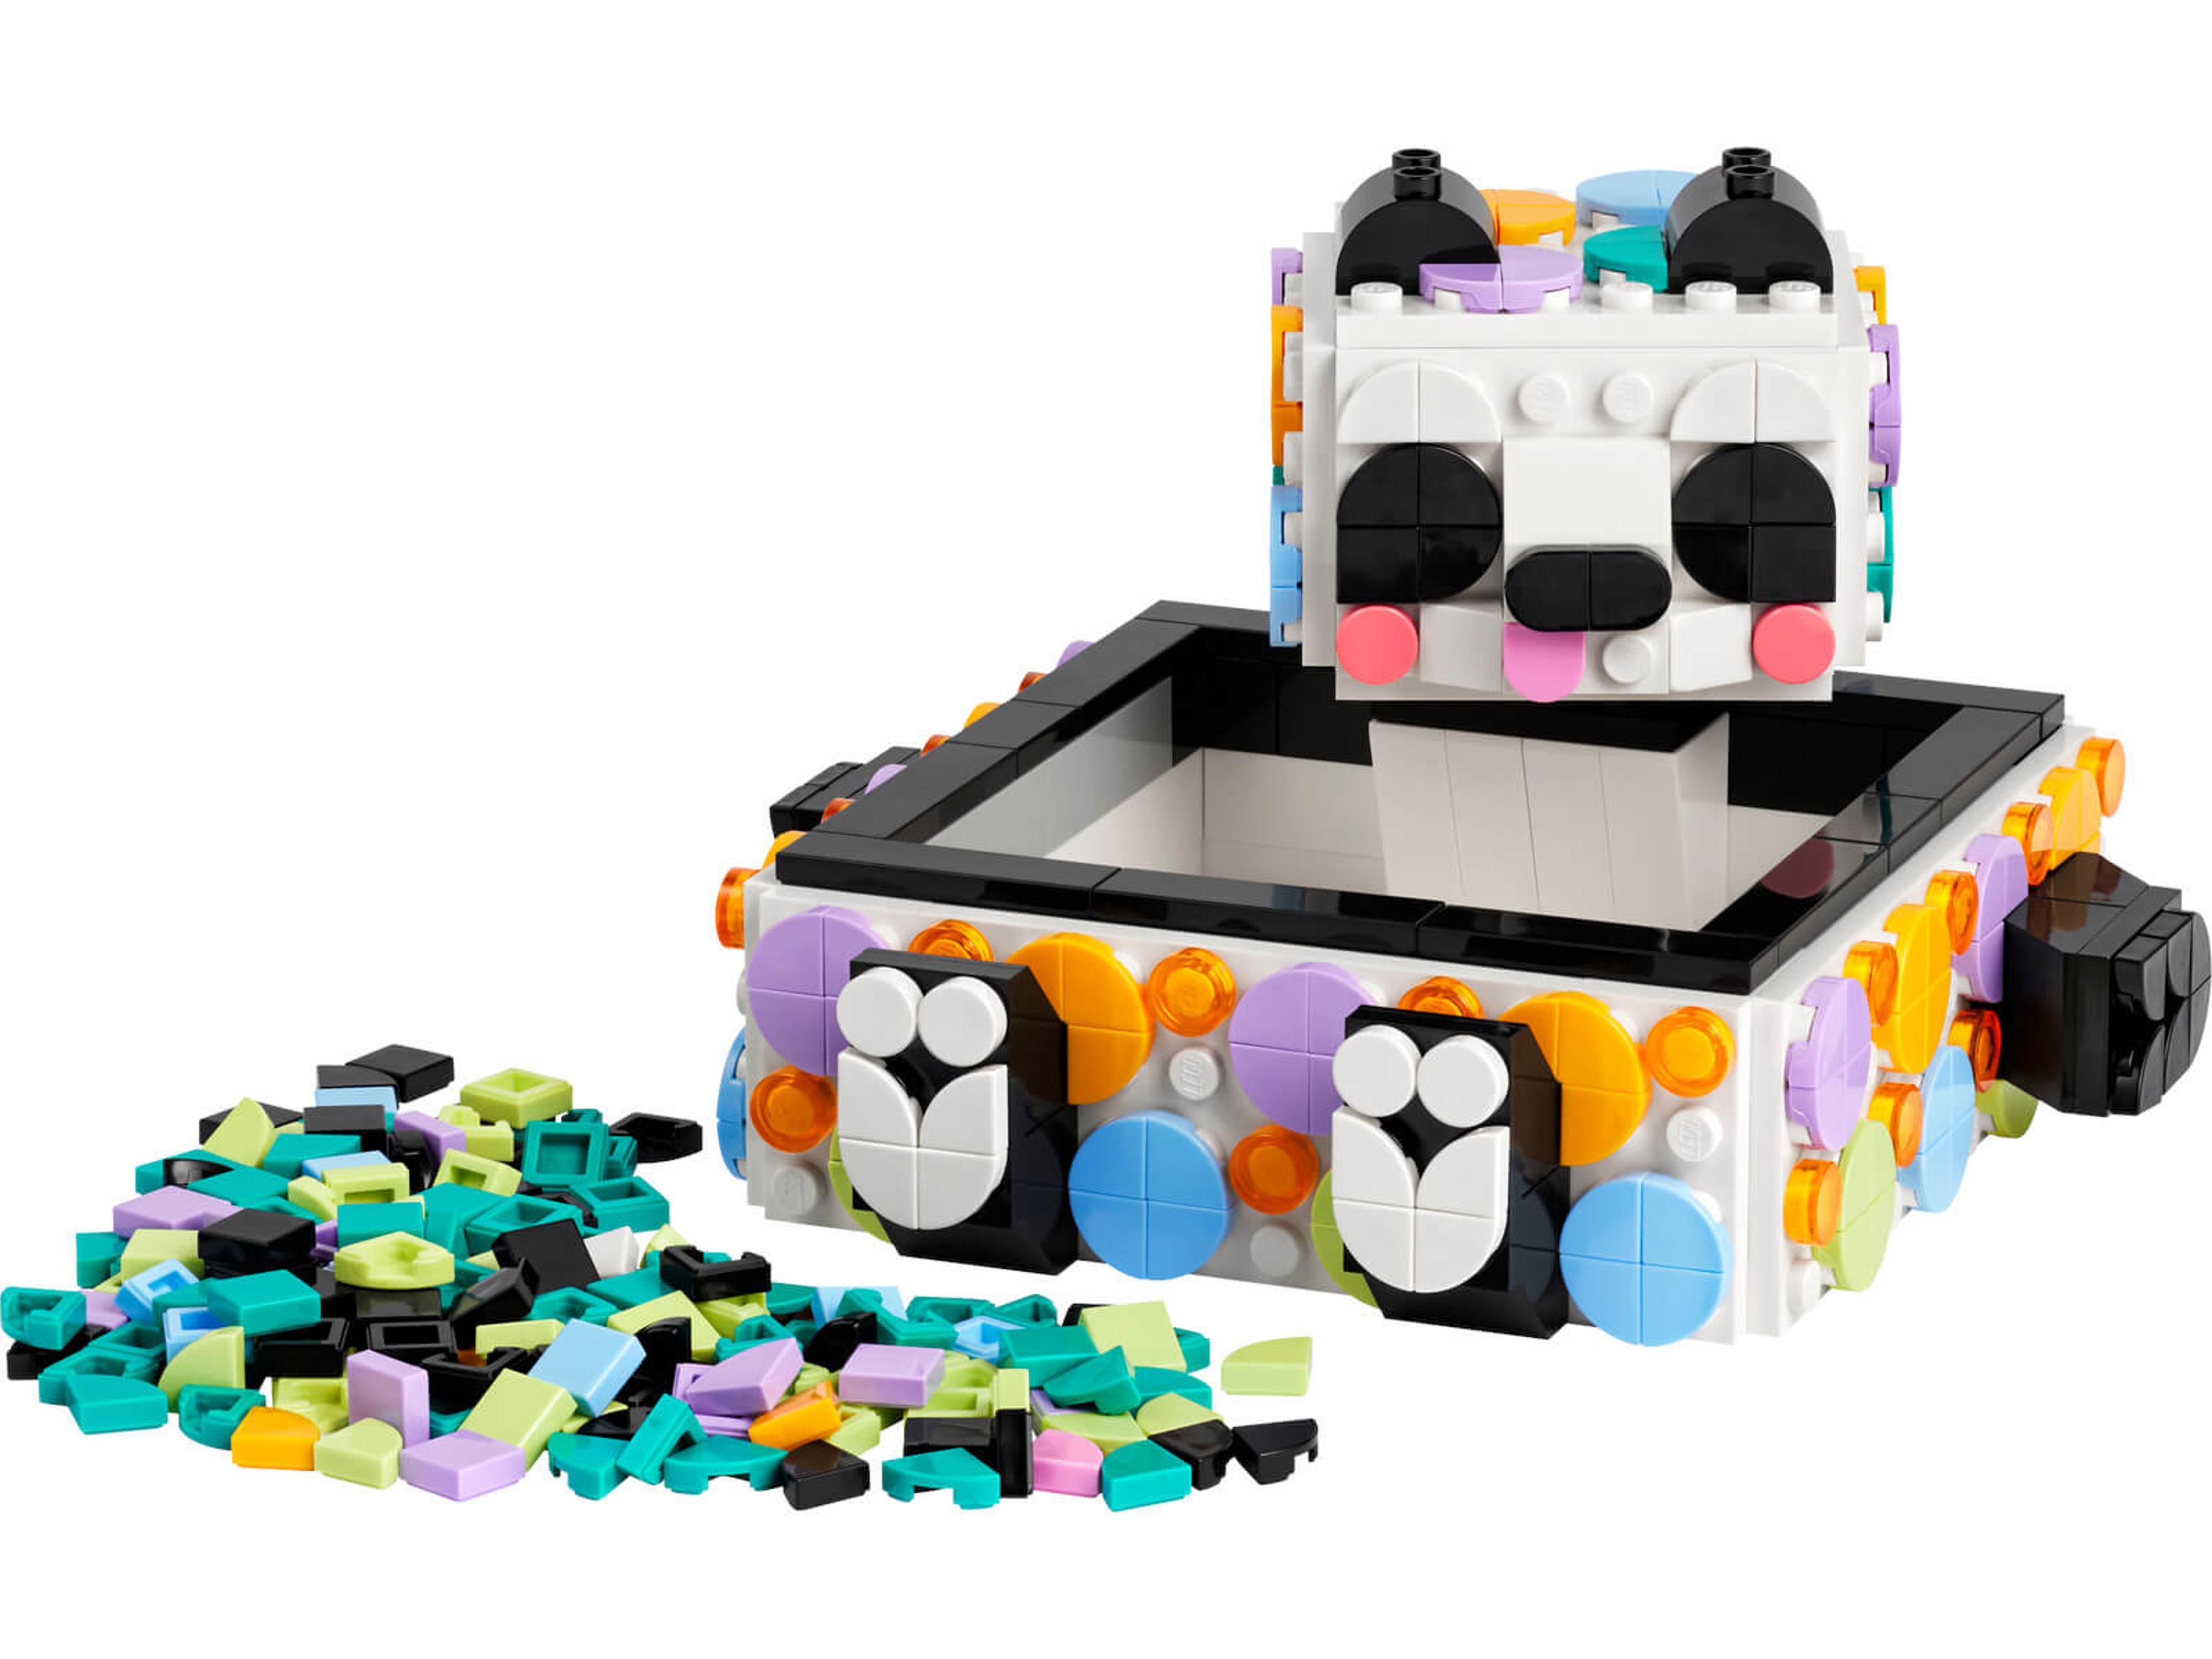 LEGO DOTS - Cute Panda Tray